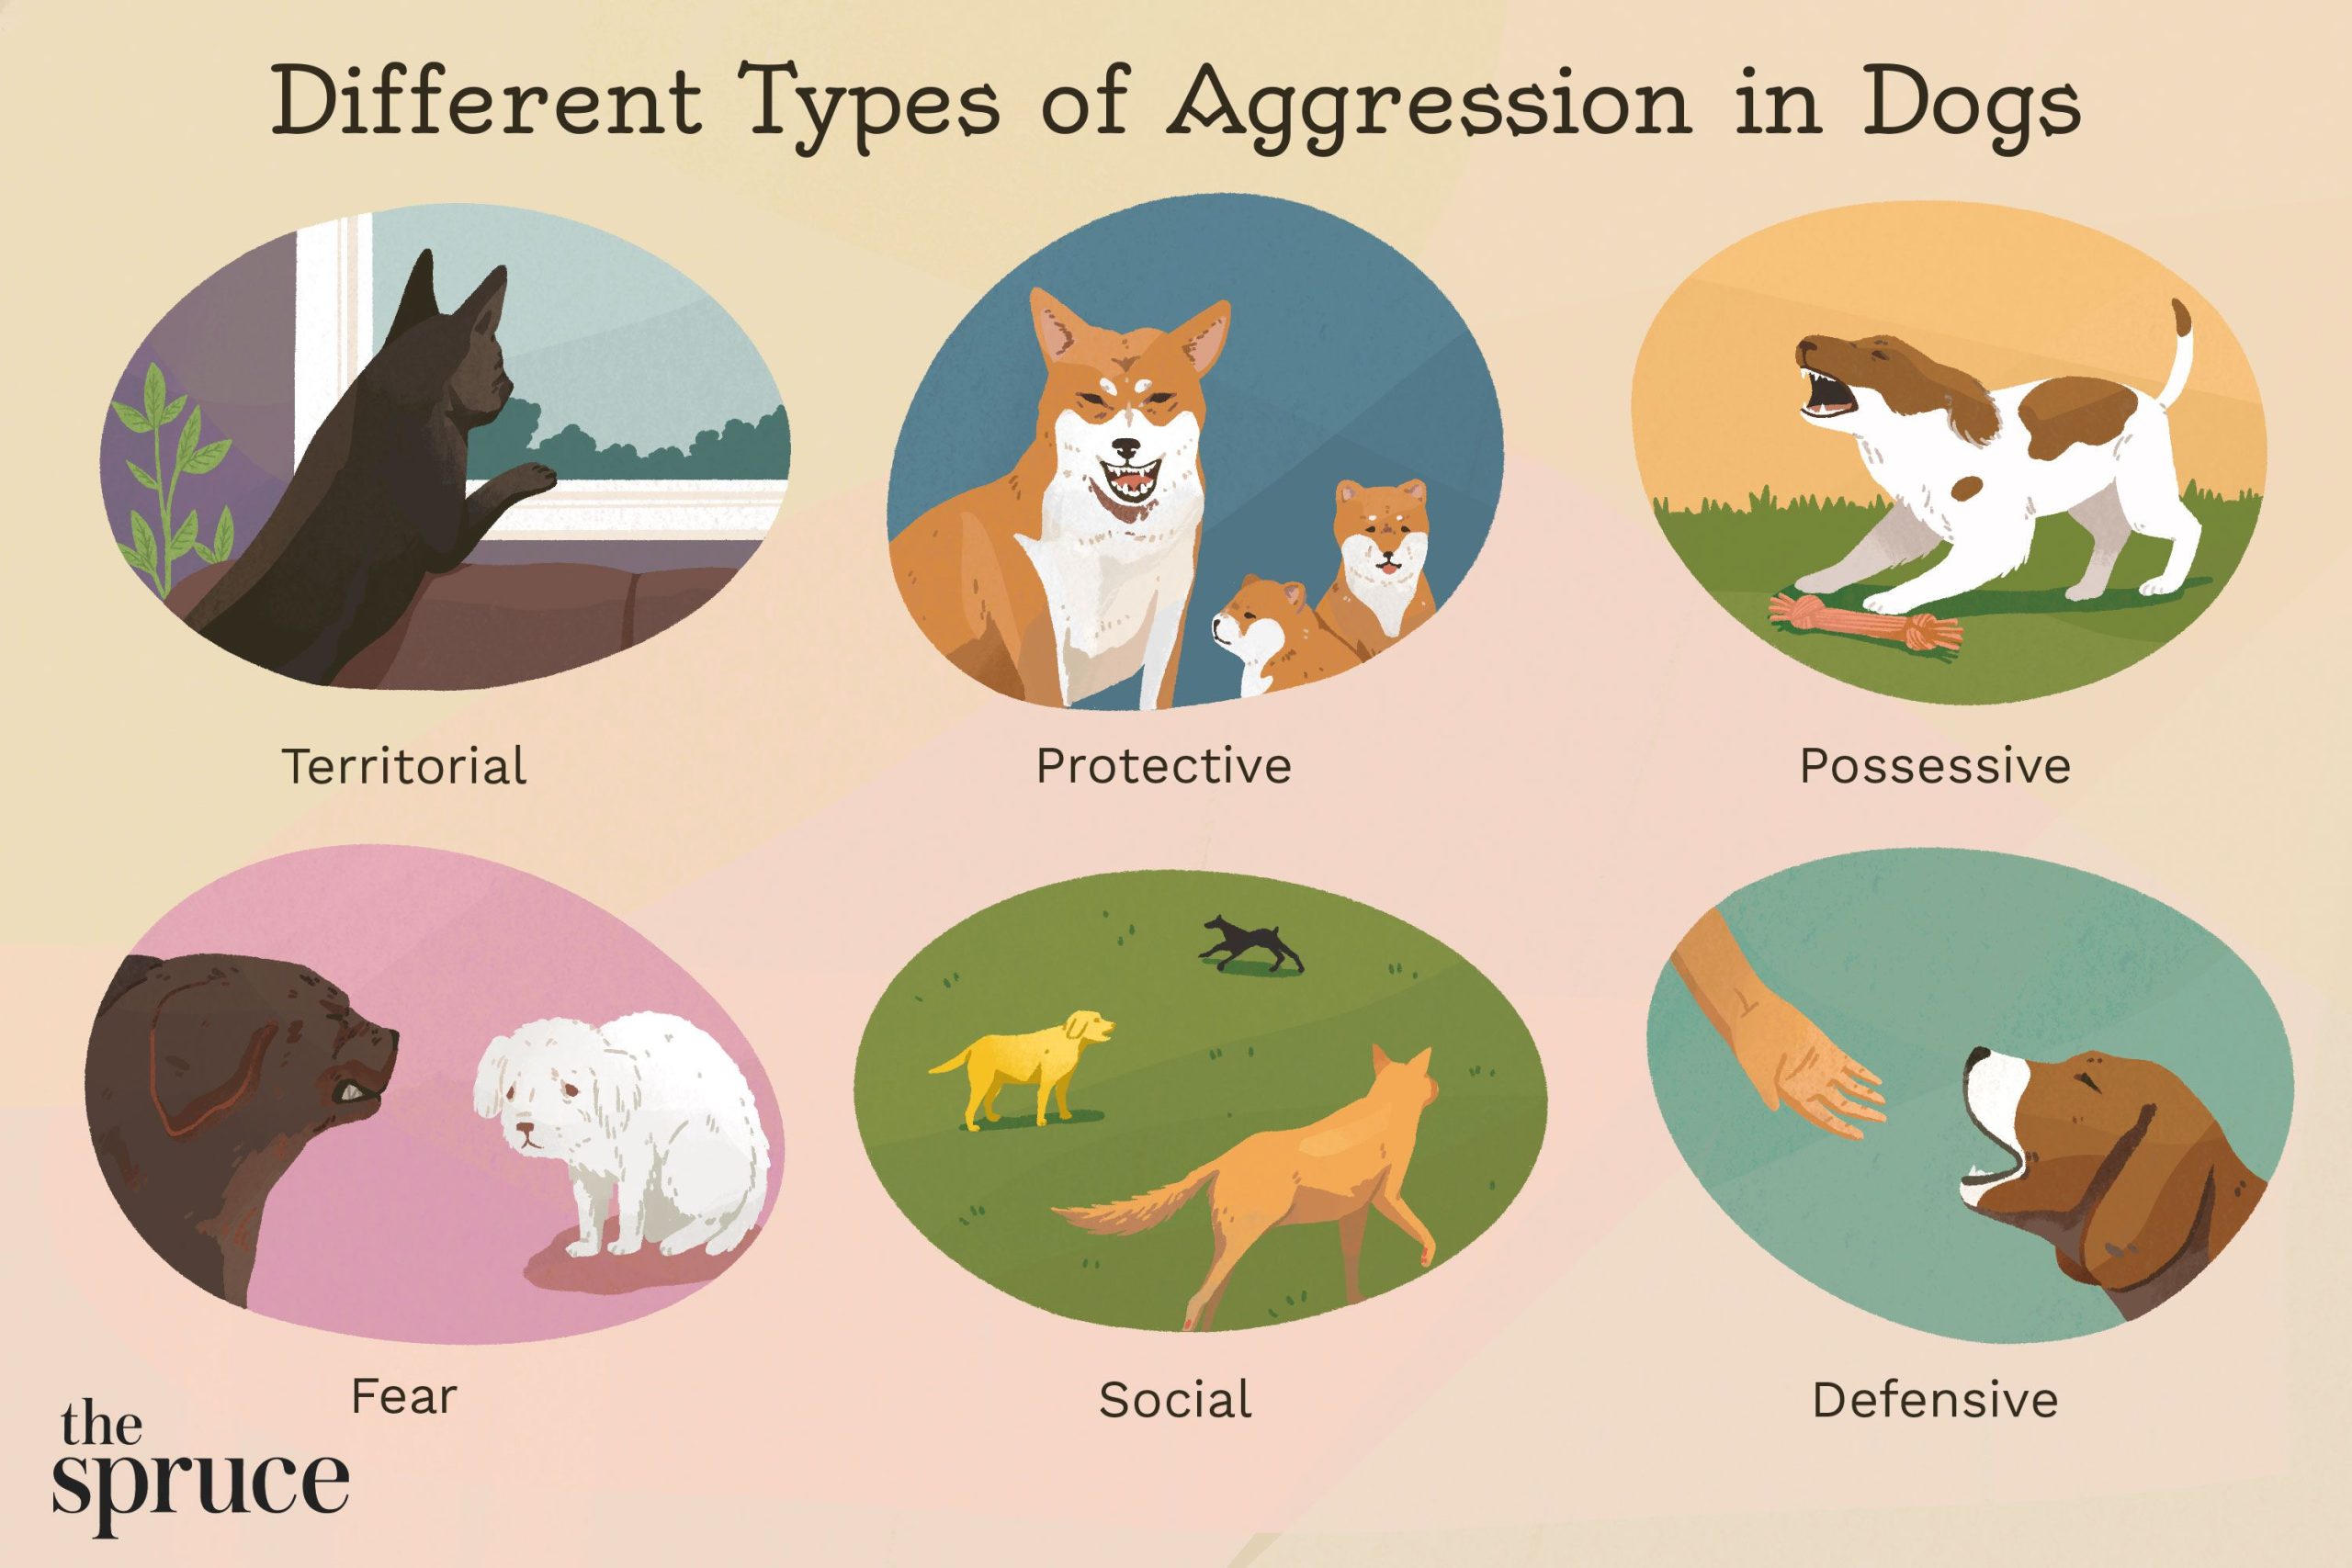 How To Handle Dog Possession Behavior?